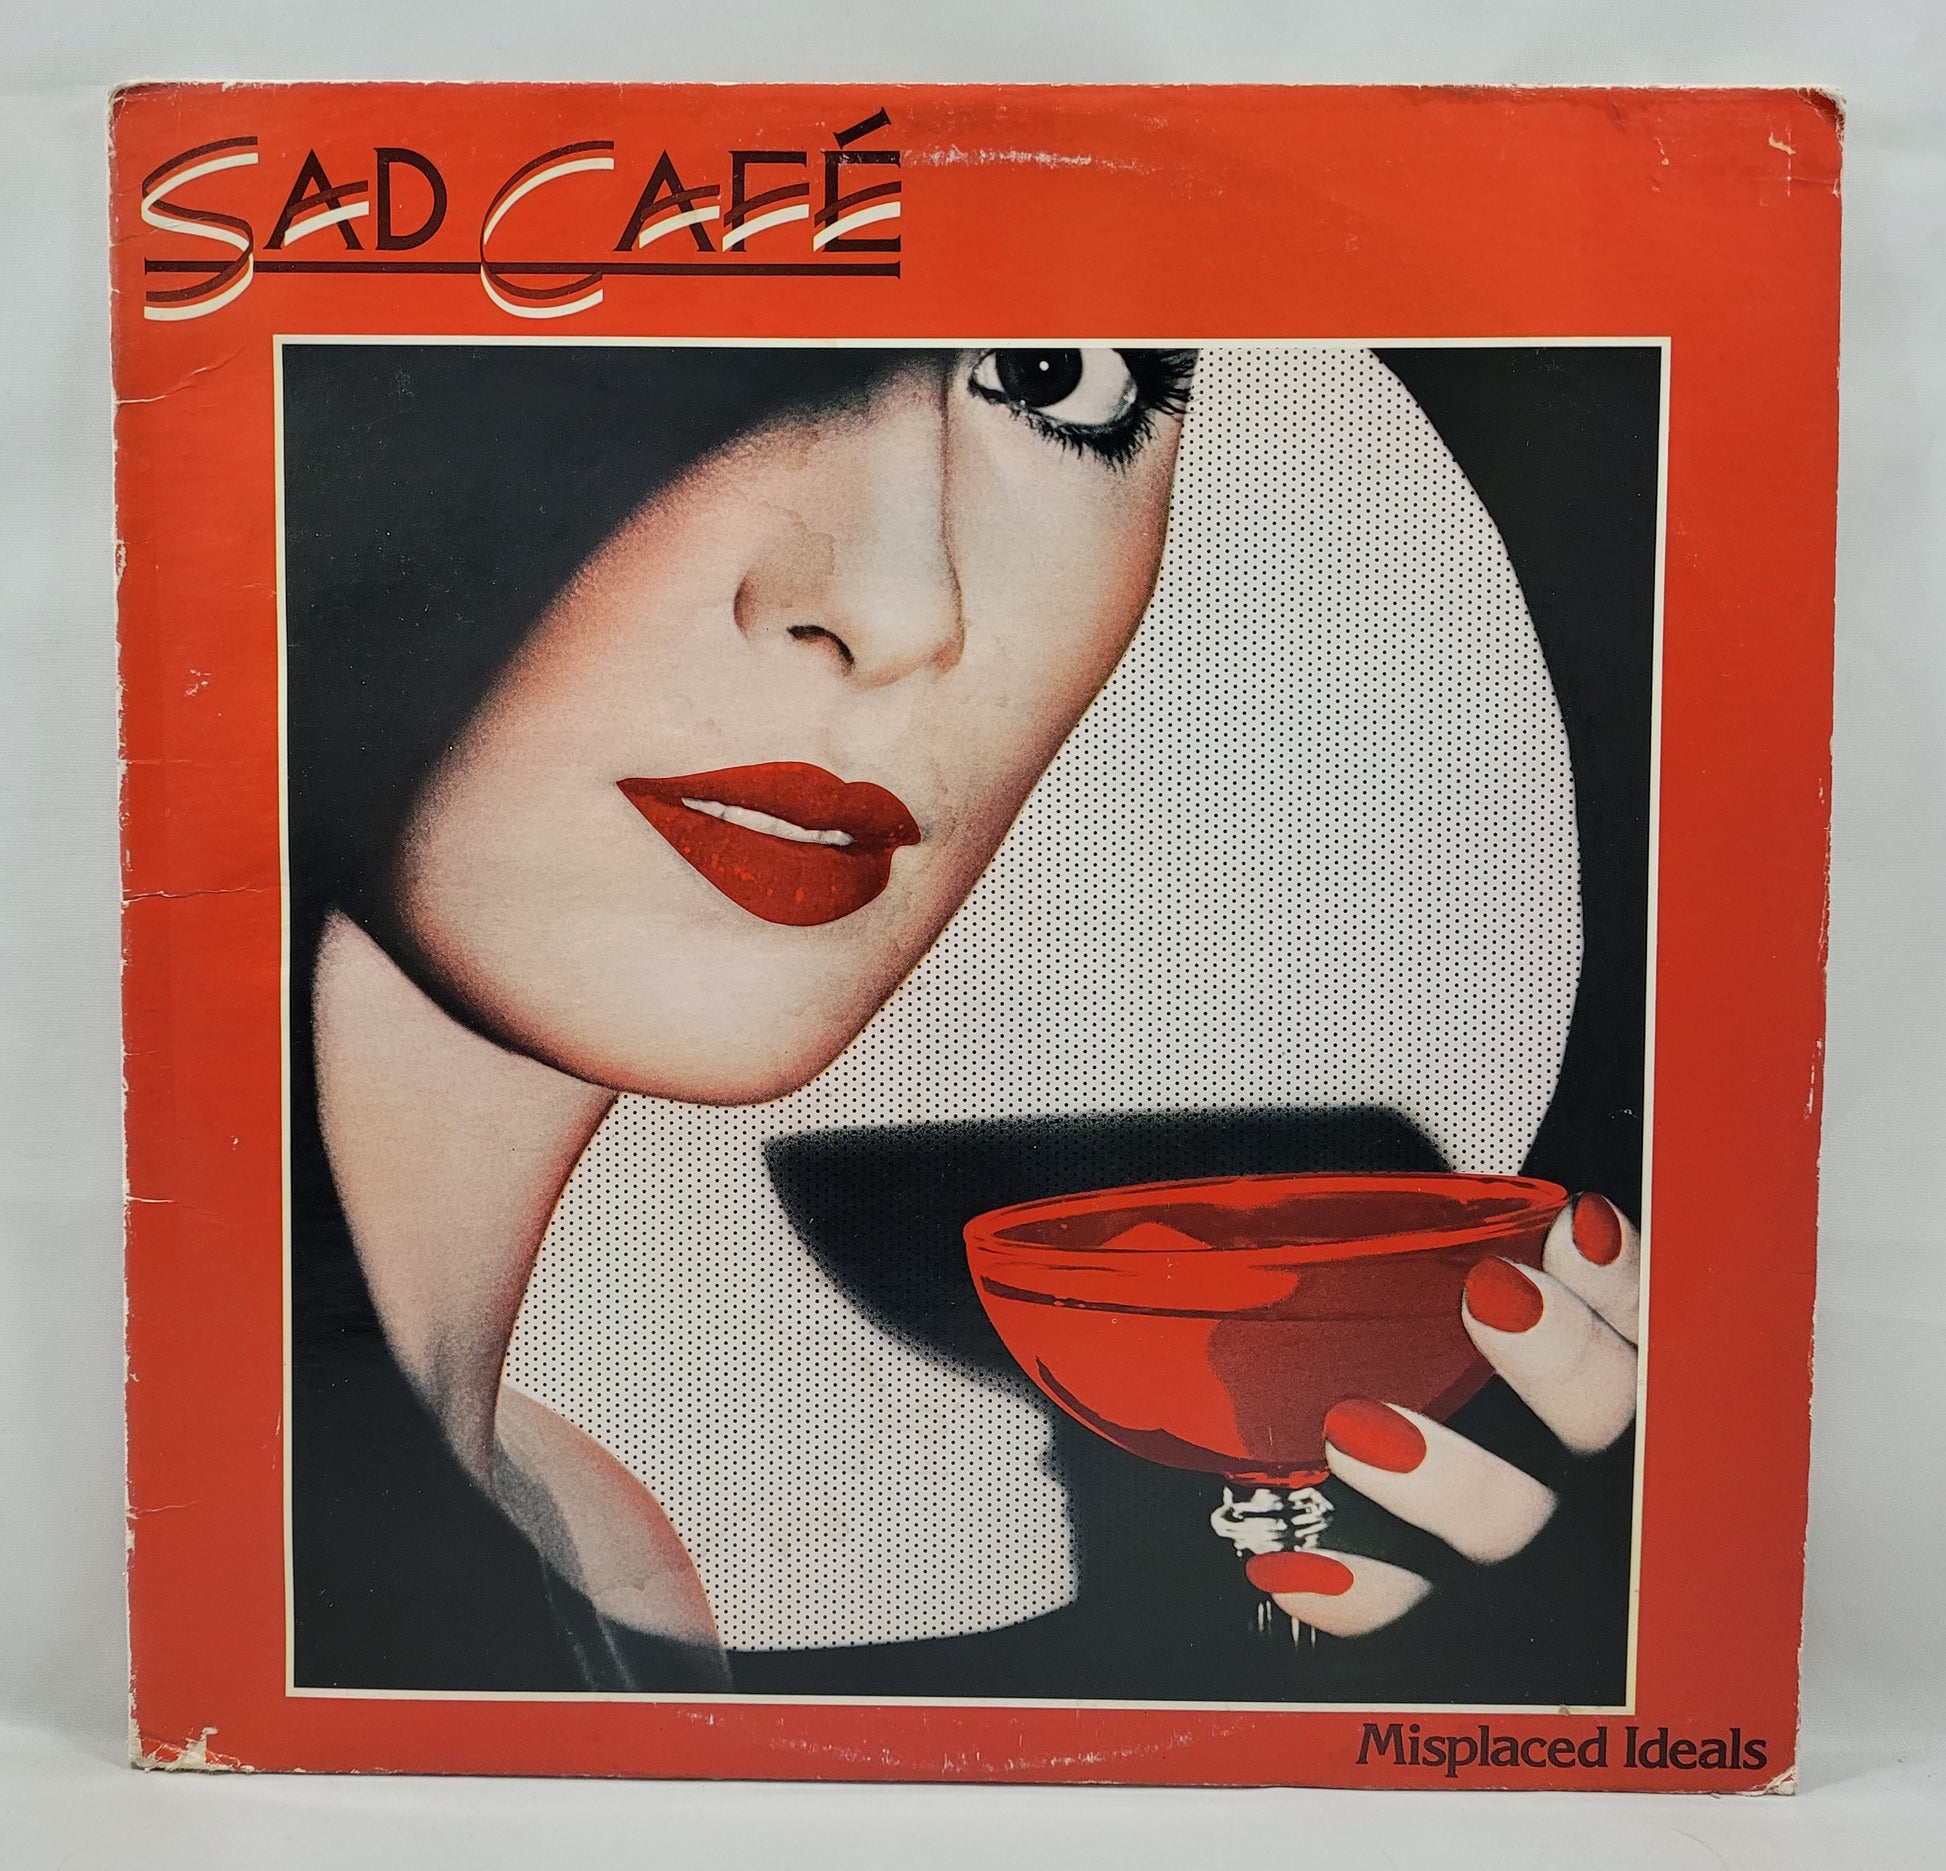 Sad Café - Misplaced Ideals [178 Monarch Pressing] [Used Vinyl Record LP]